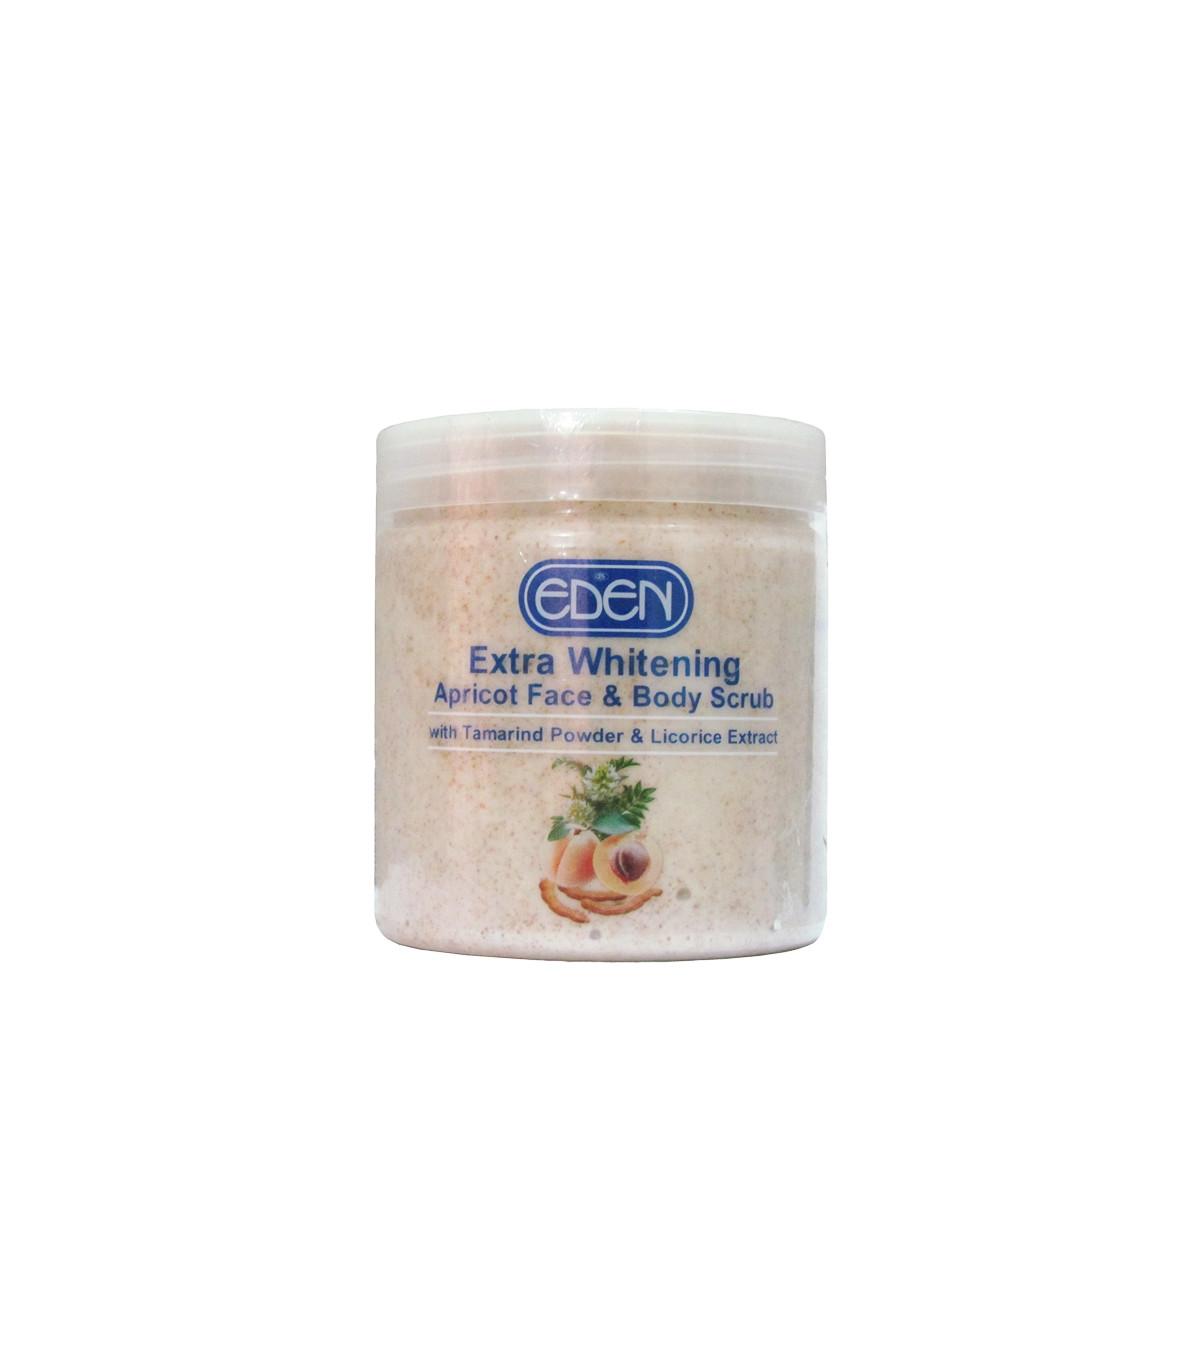 Eden Extra Whitening Apricot Face & Body Scrub – 500g